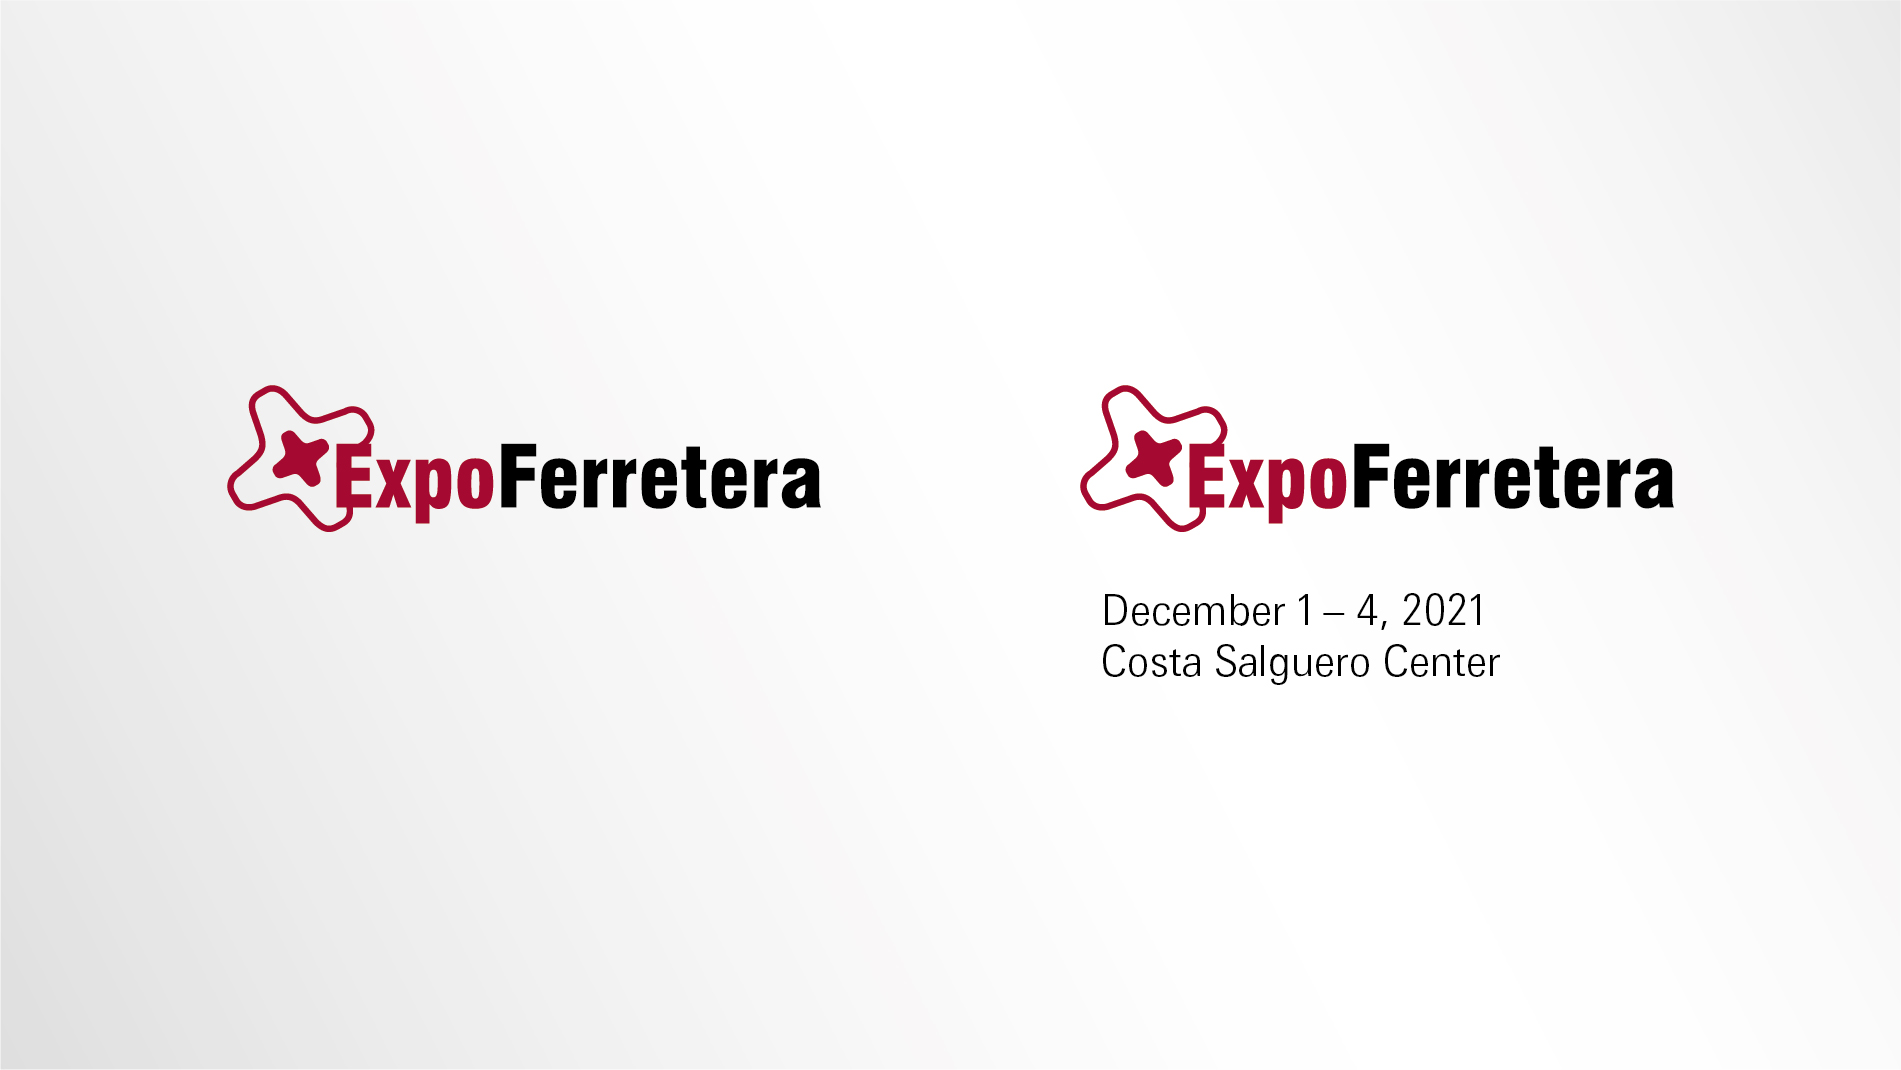 ExpoFerretera: Event logo and eye-catching